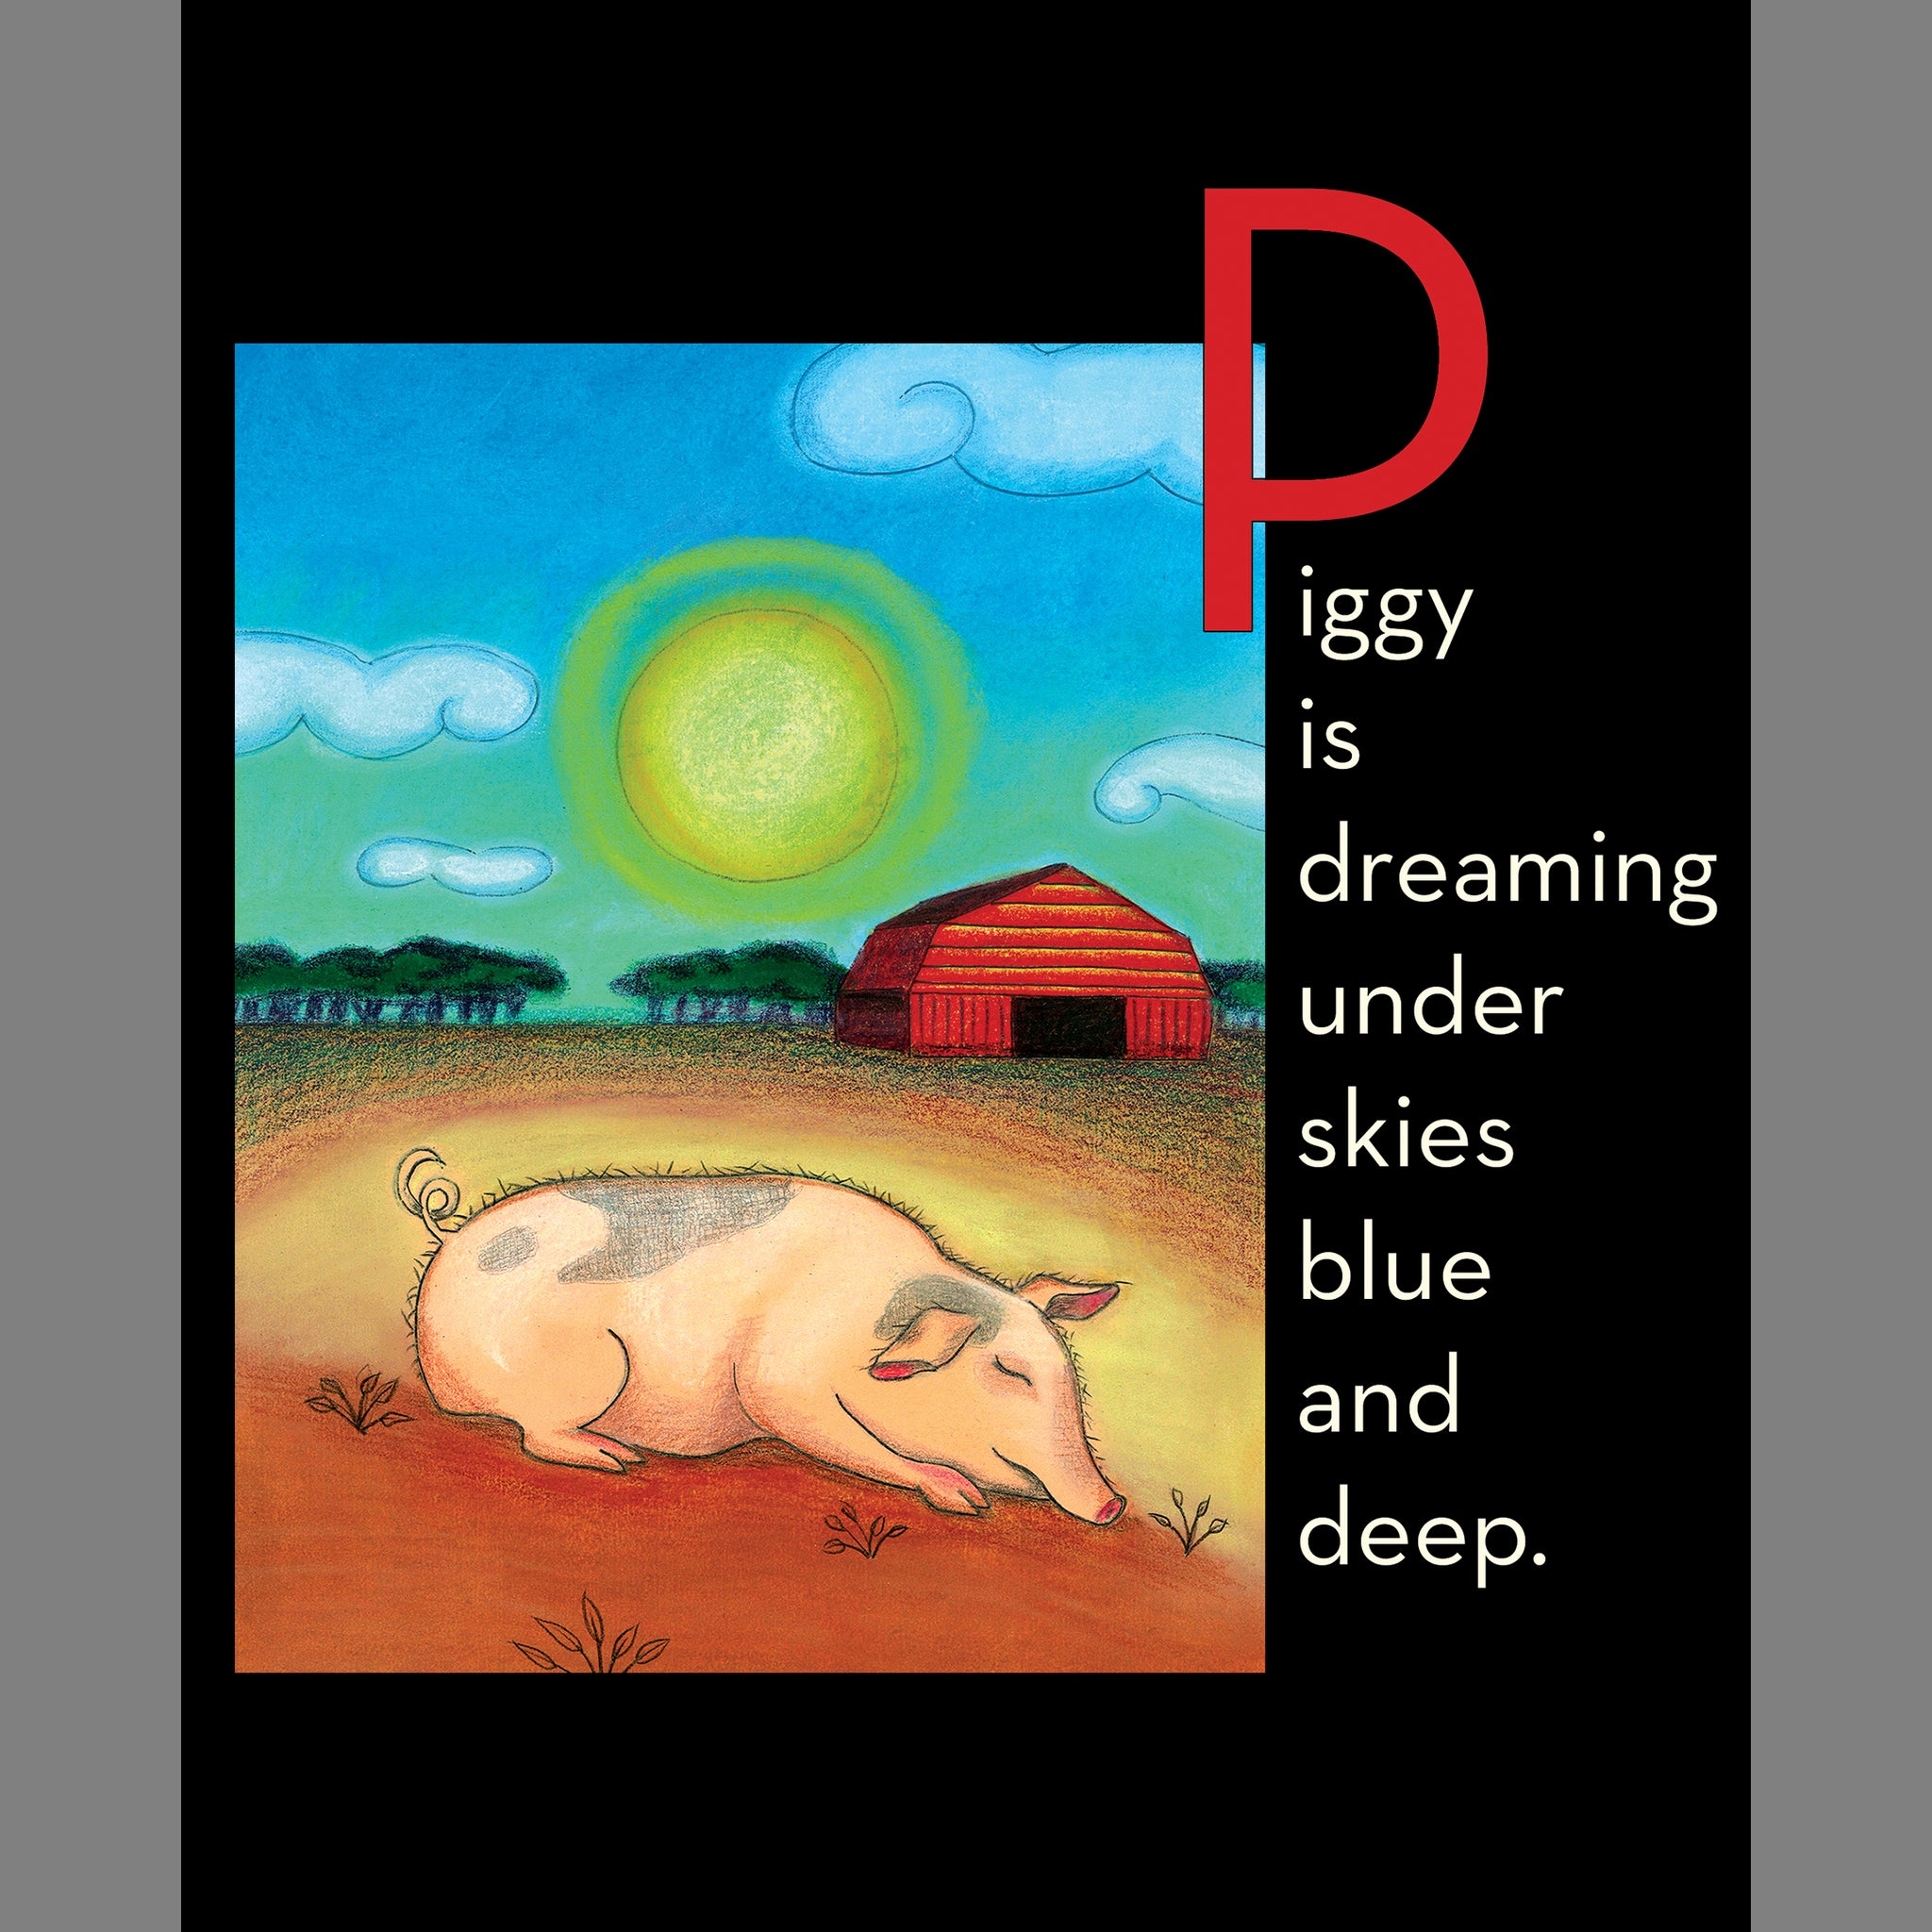 Set P: ABC book with Pig Luminette nightlight